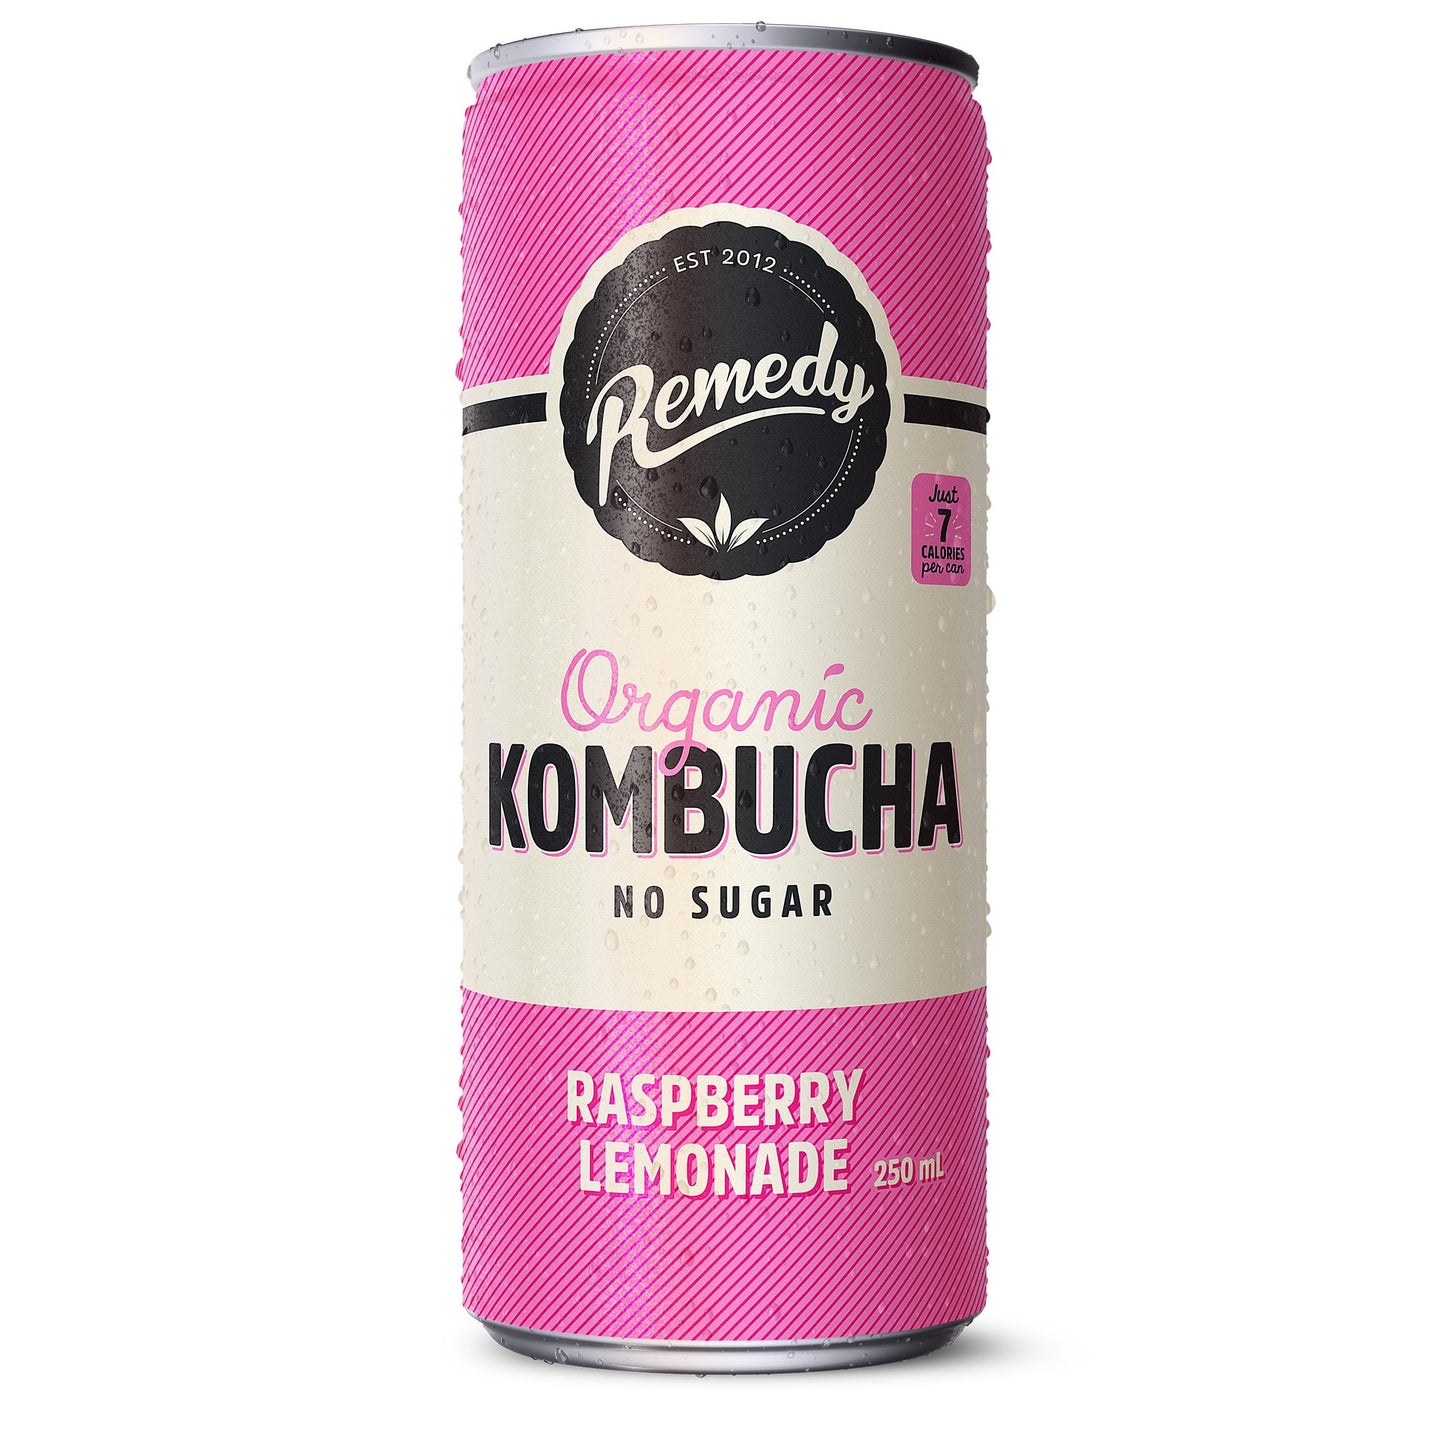 SPECIAL Remedy Raspberry Lemonade Kombucha X4 Pack